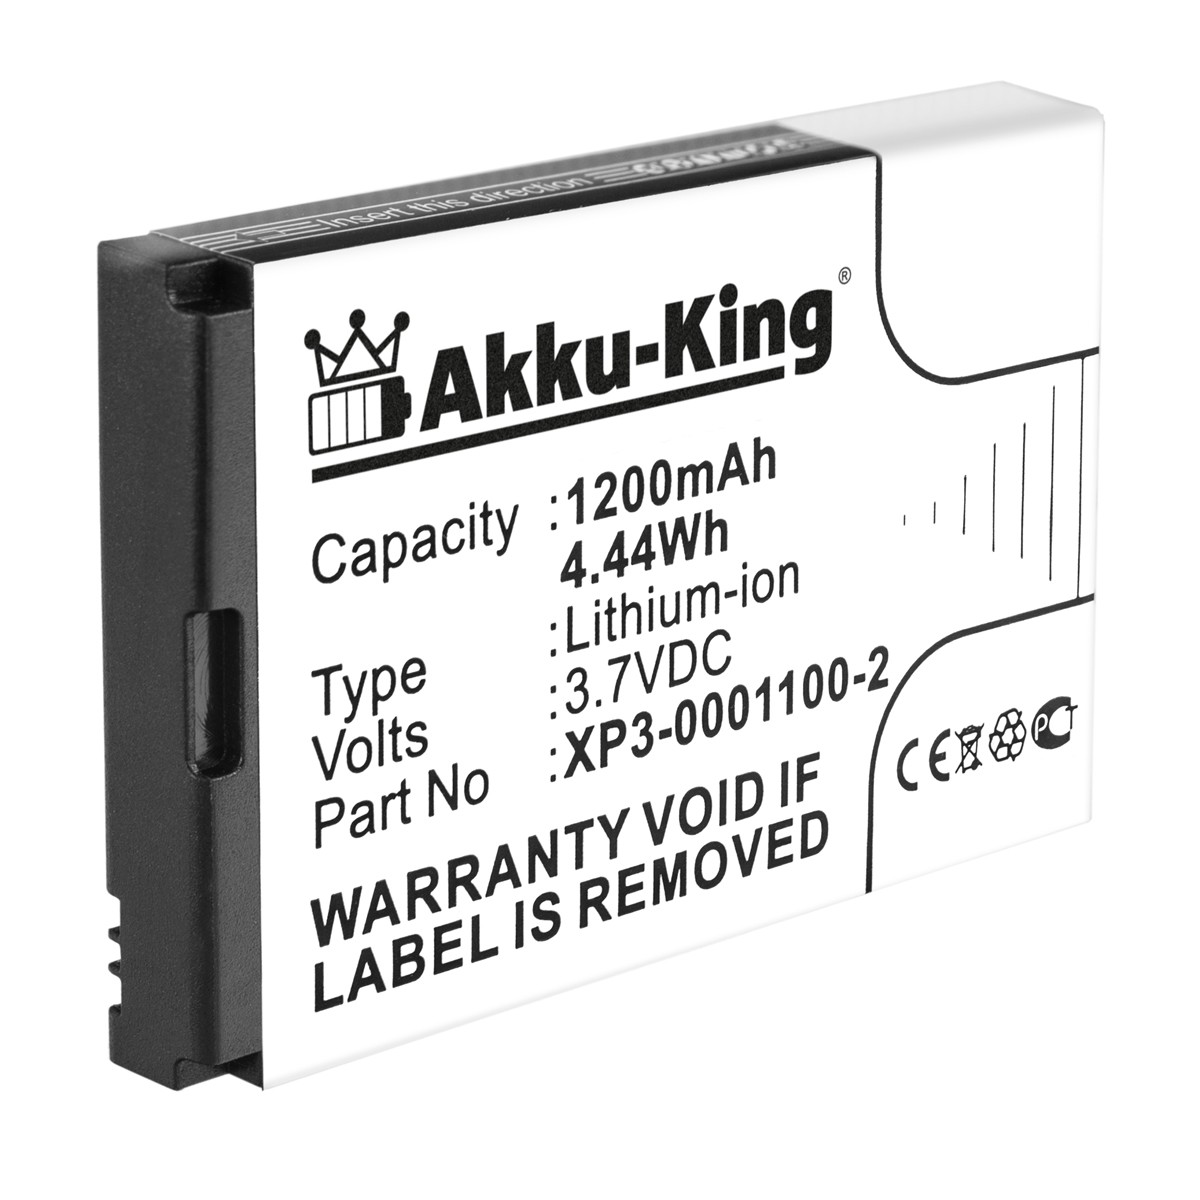 1200mAh Volt, mit XP3-0001100-2 3.7 Handy-Akku, kompatibel Socketmobile Akku Li-Ion AKKU-KING